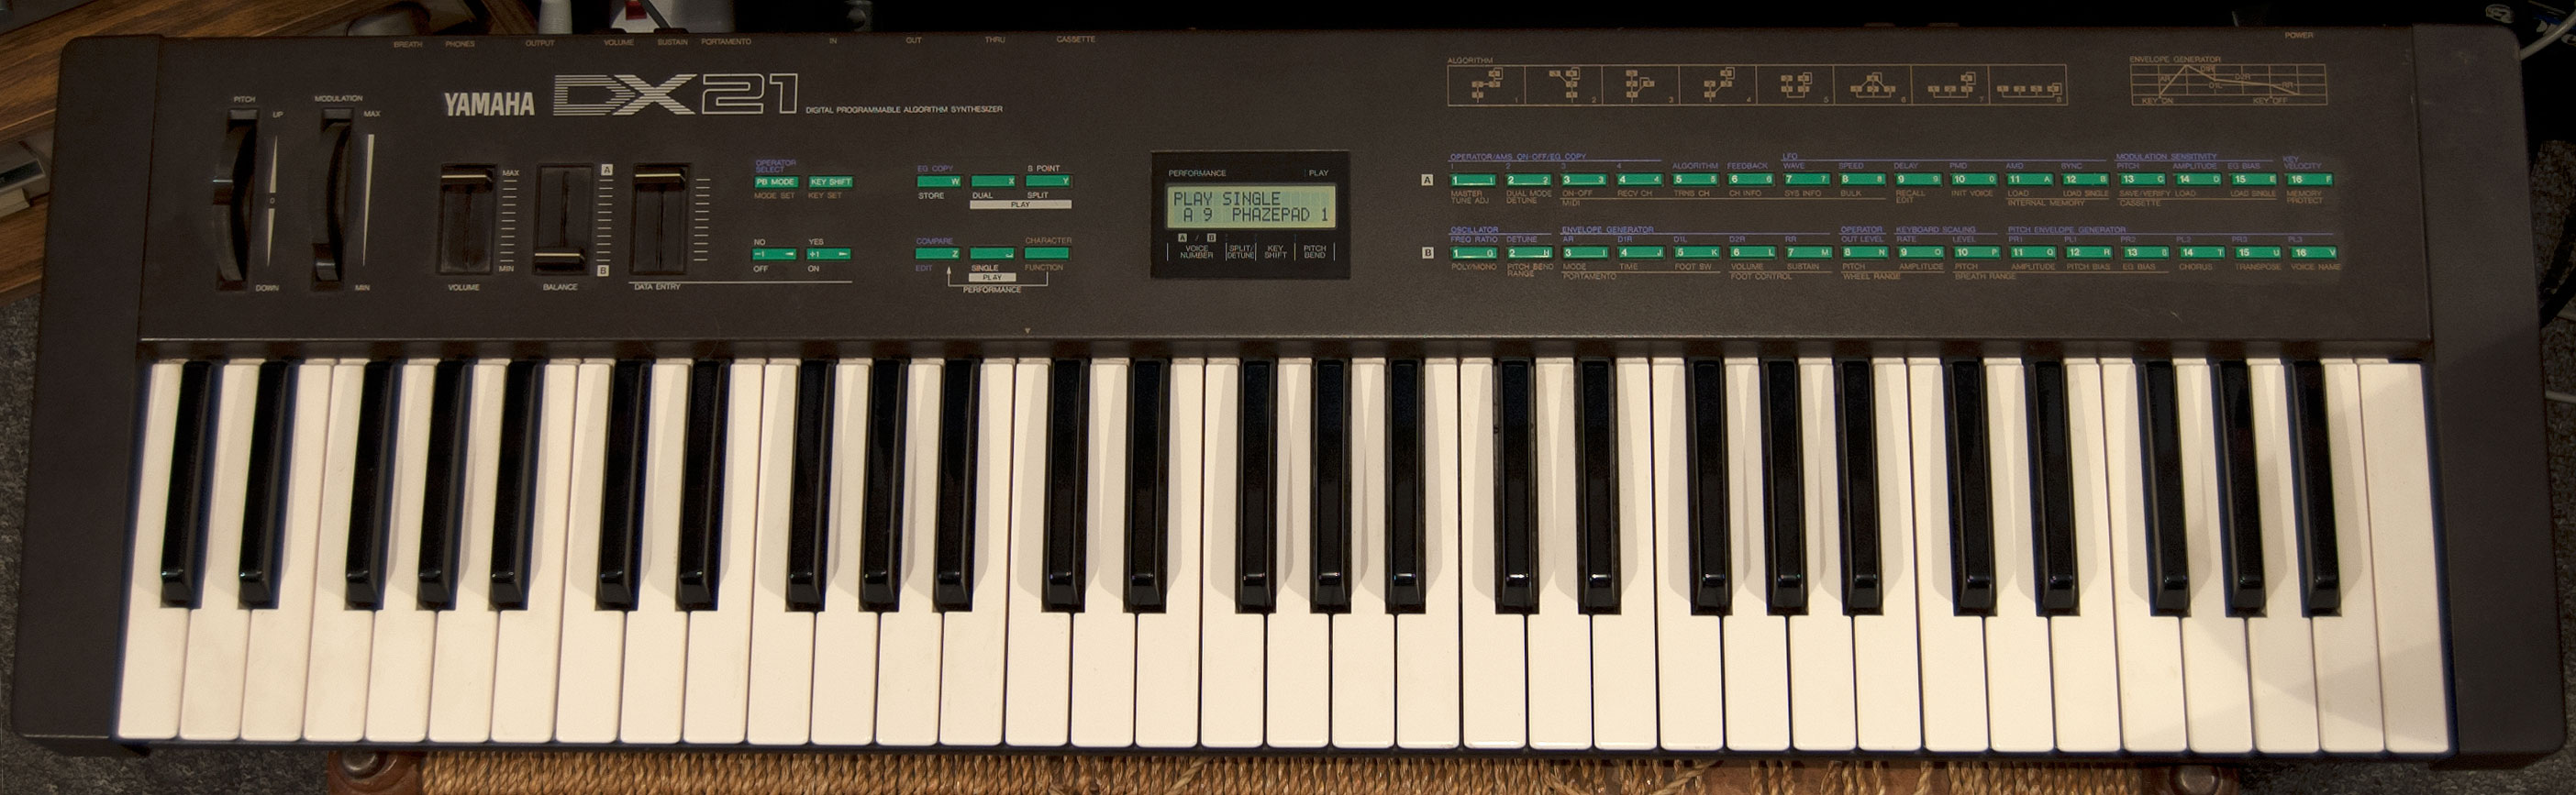 yamaha dx21 (1985) digital programmable algorithm synthesizer